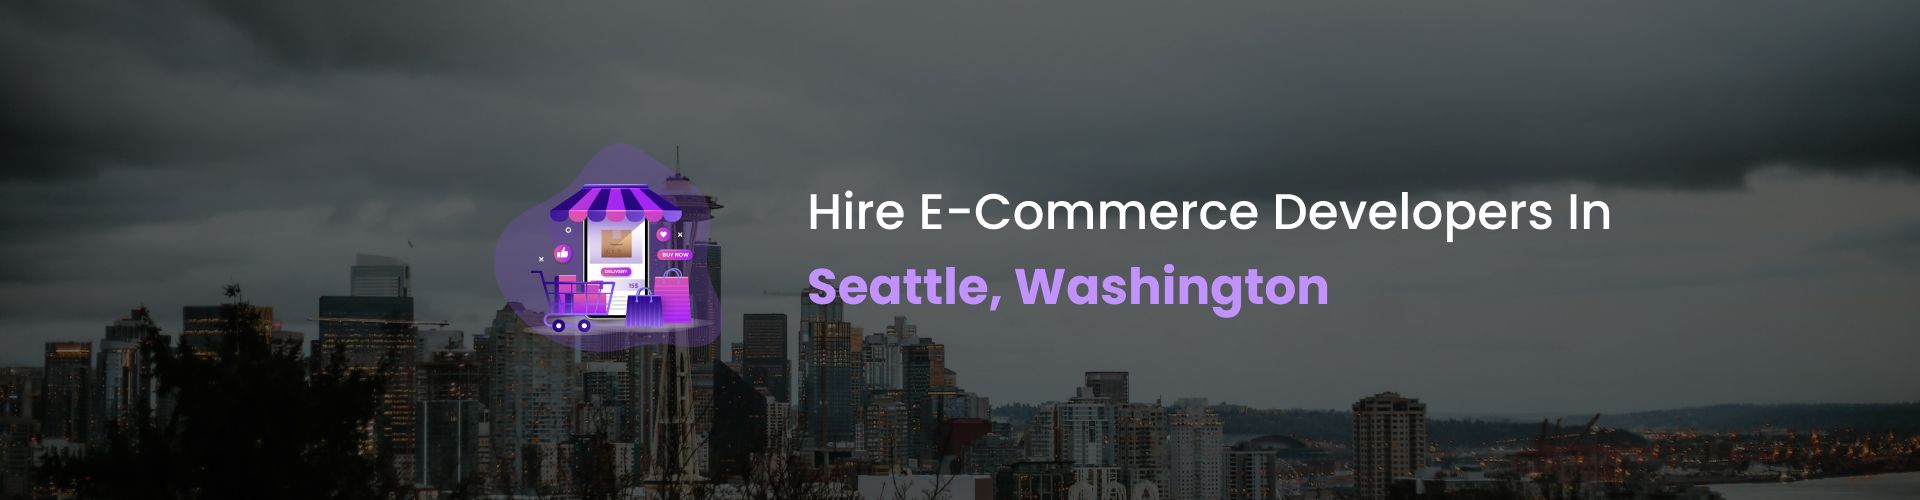 hire ecommerce developers in seattle, washington